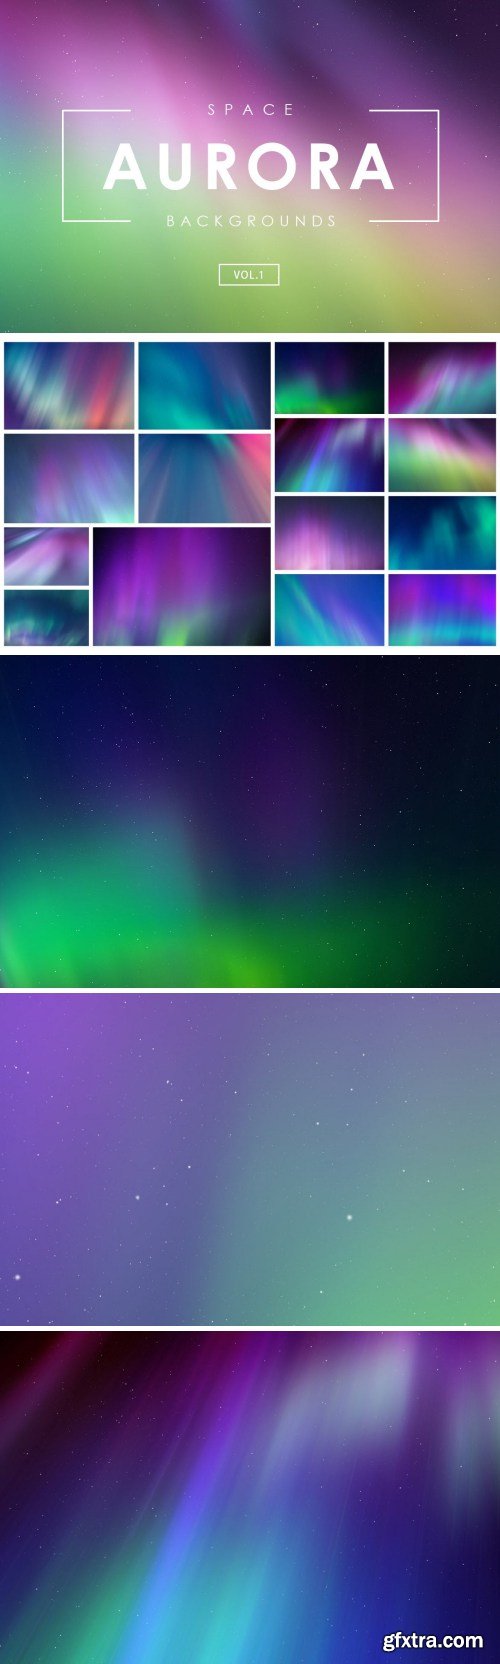 Aurora Space Backgrounds Vol.1